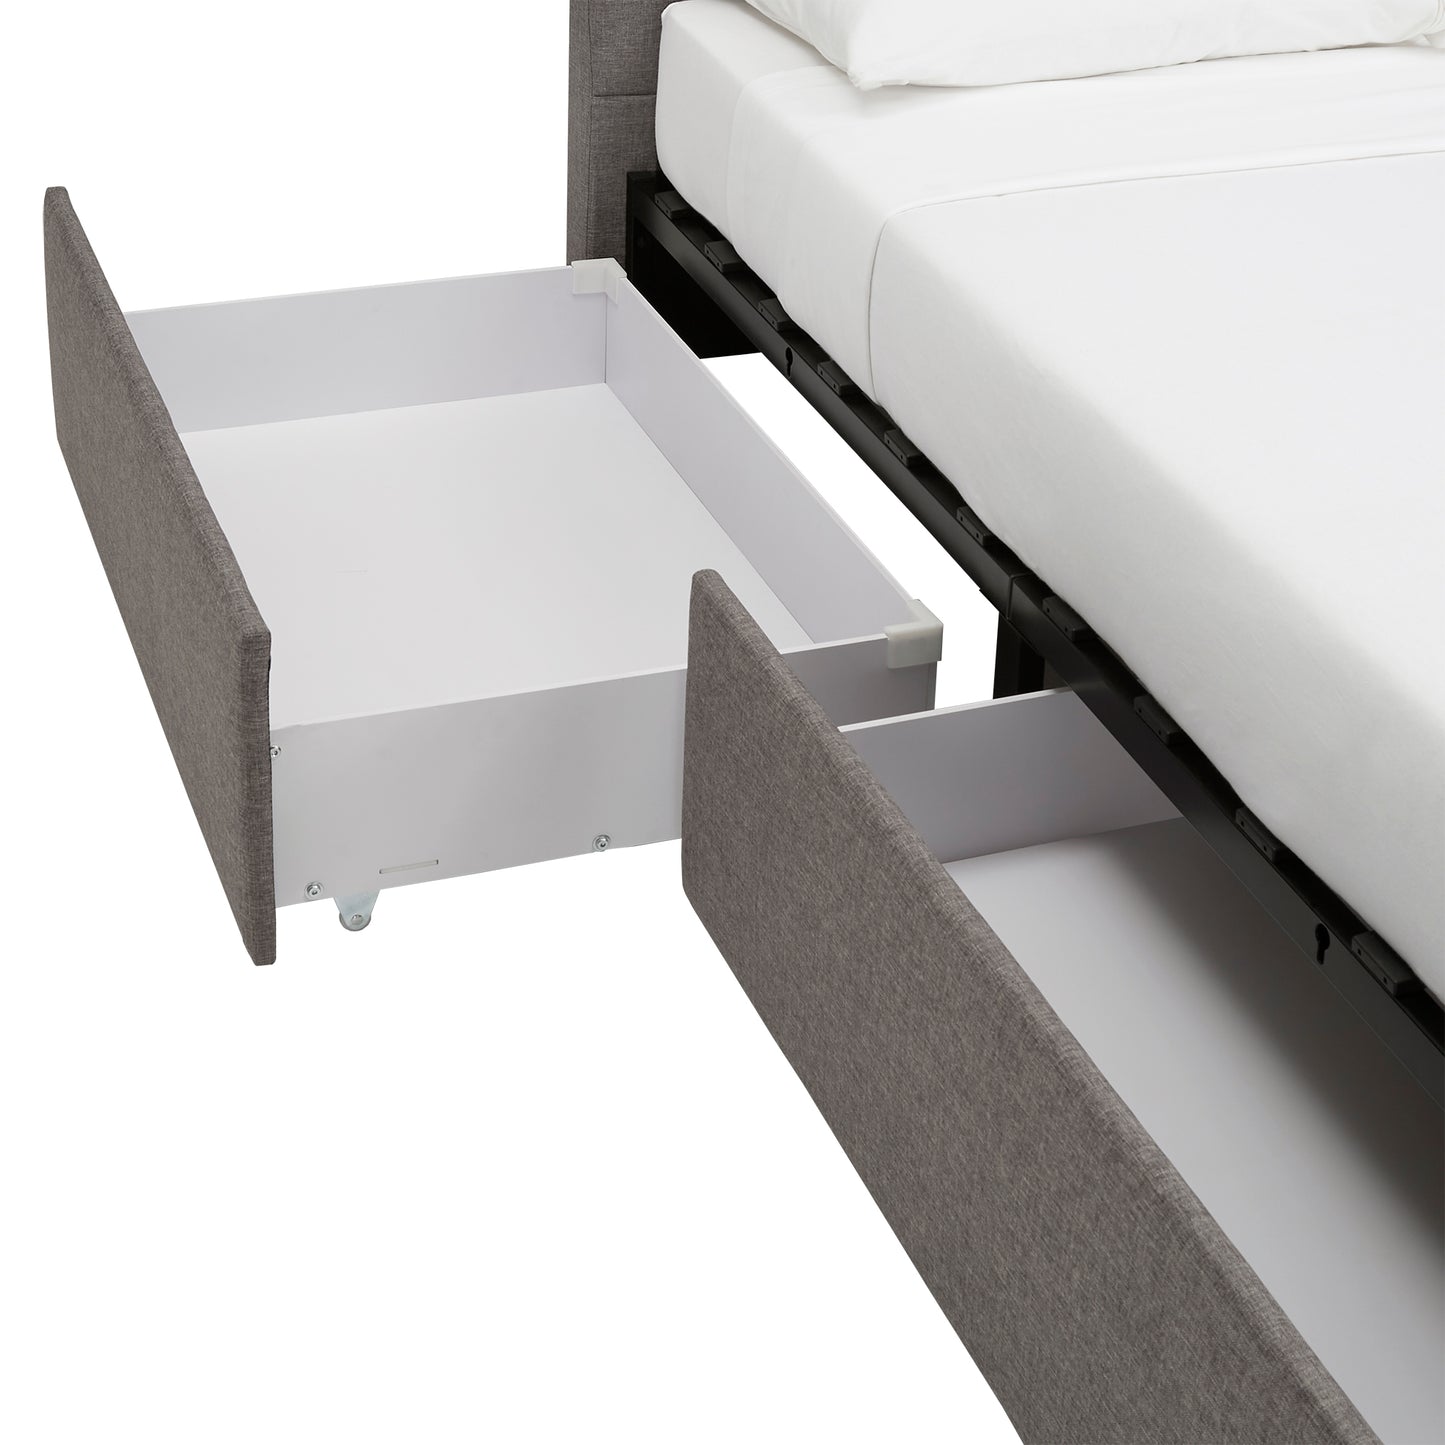 Grey Linen Upholstered Storage Platform Bed with Channel Headboard - Queen (Queen Size)